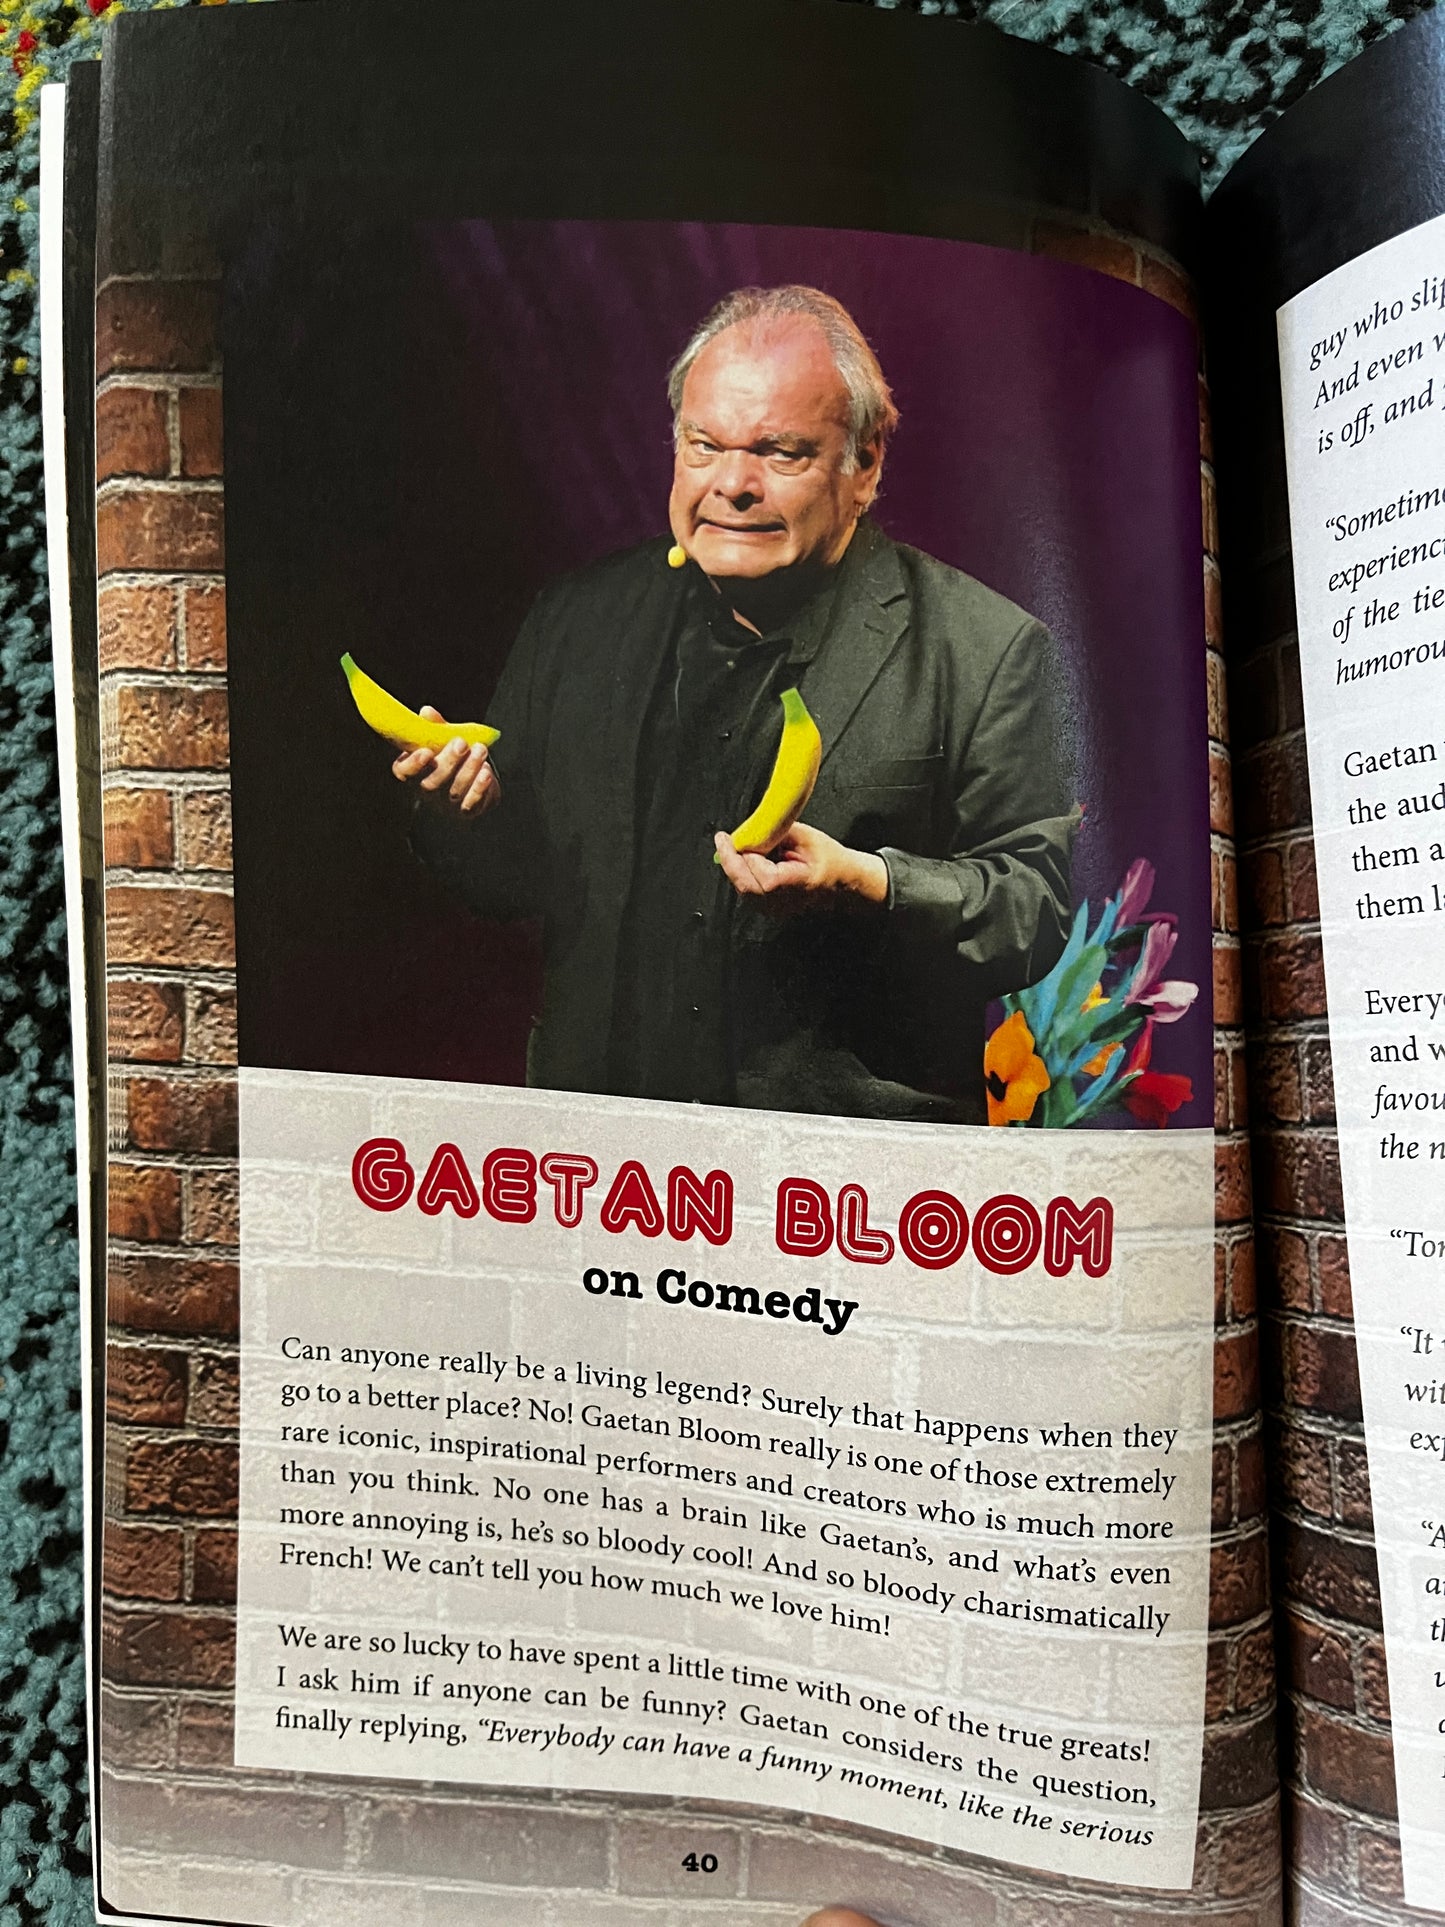 The Comedy Helpline (paperback) - Magicseen Magazine